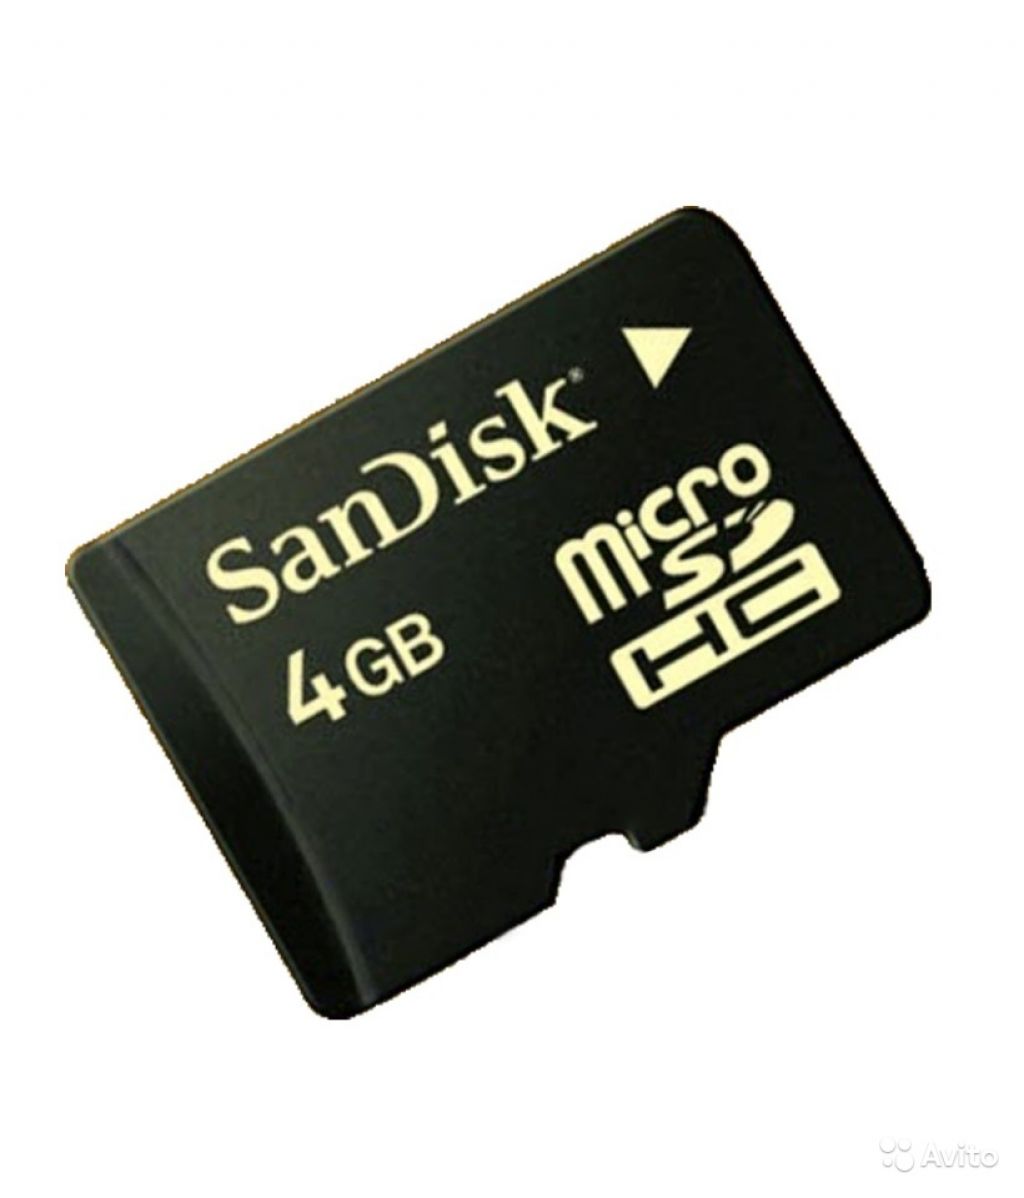 Флешки микро SD SANDISK. MICROSD 4 GB. Флешка SANDISK 4gb. Флешки микро на 4 ГБ.